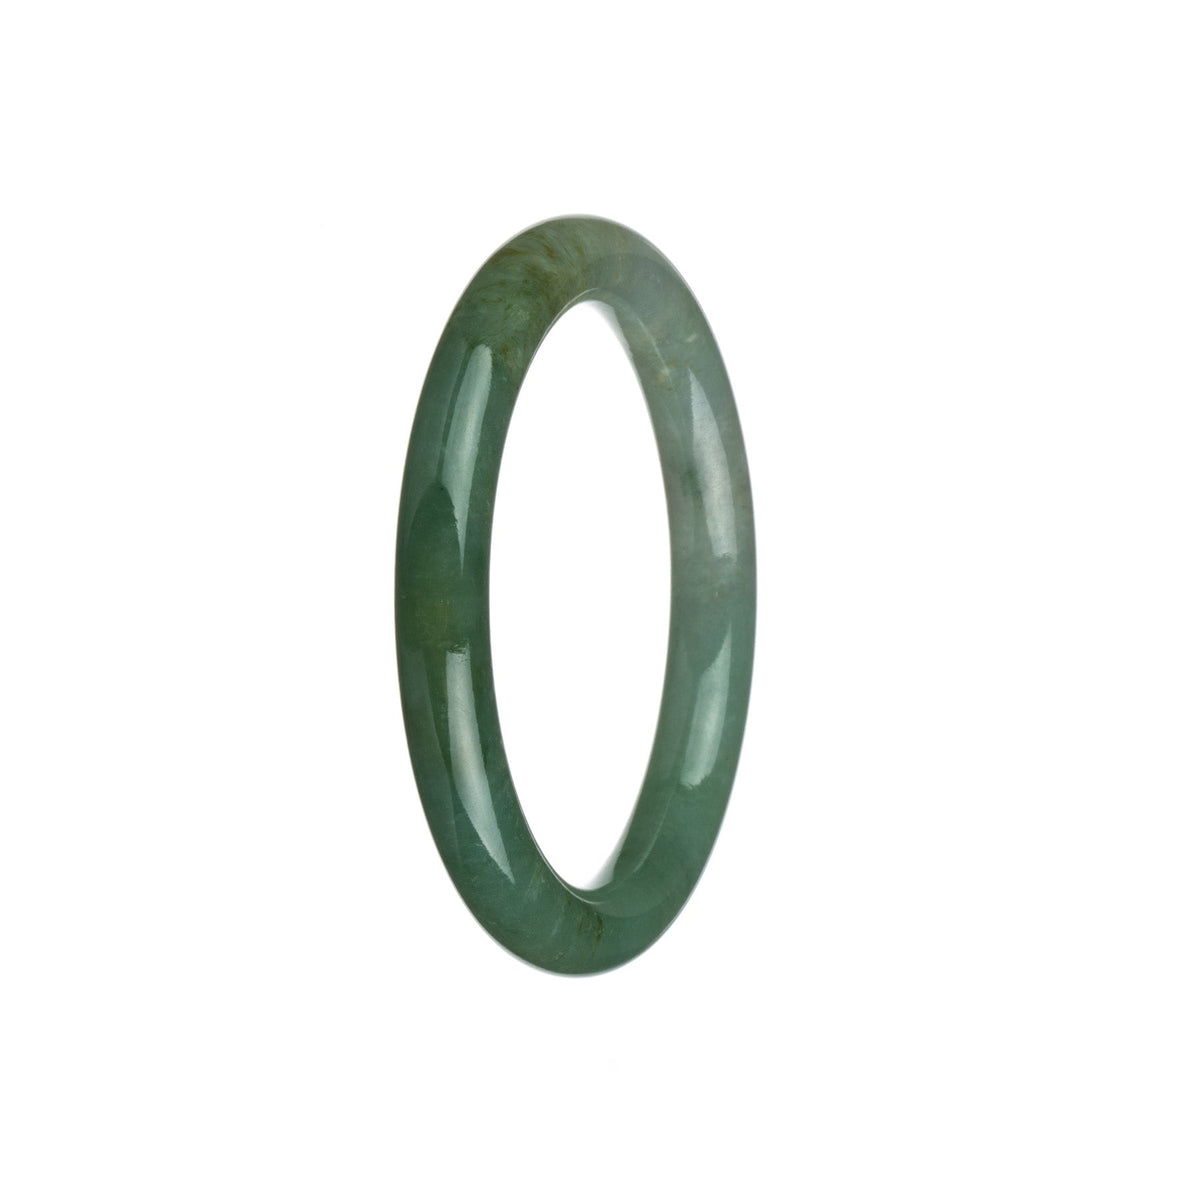 Certified Grade A Green and White Jadeite Jade Bracelet - 54mm Petite Round